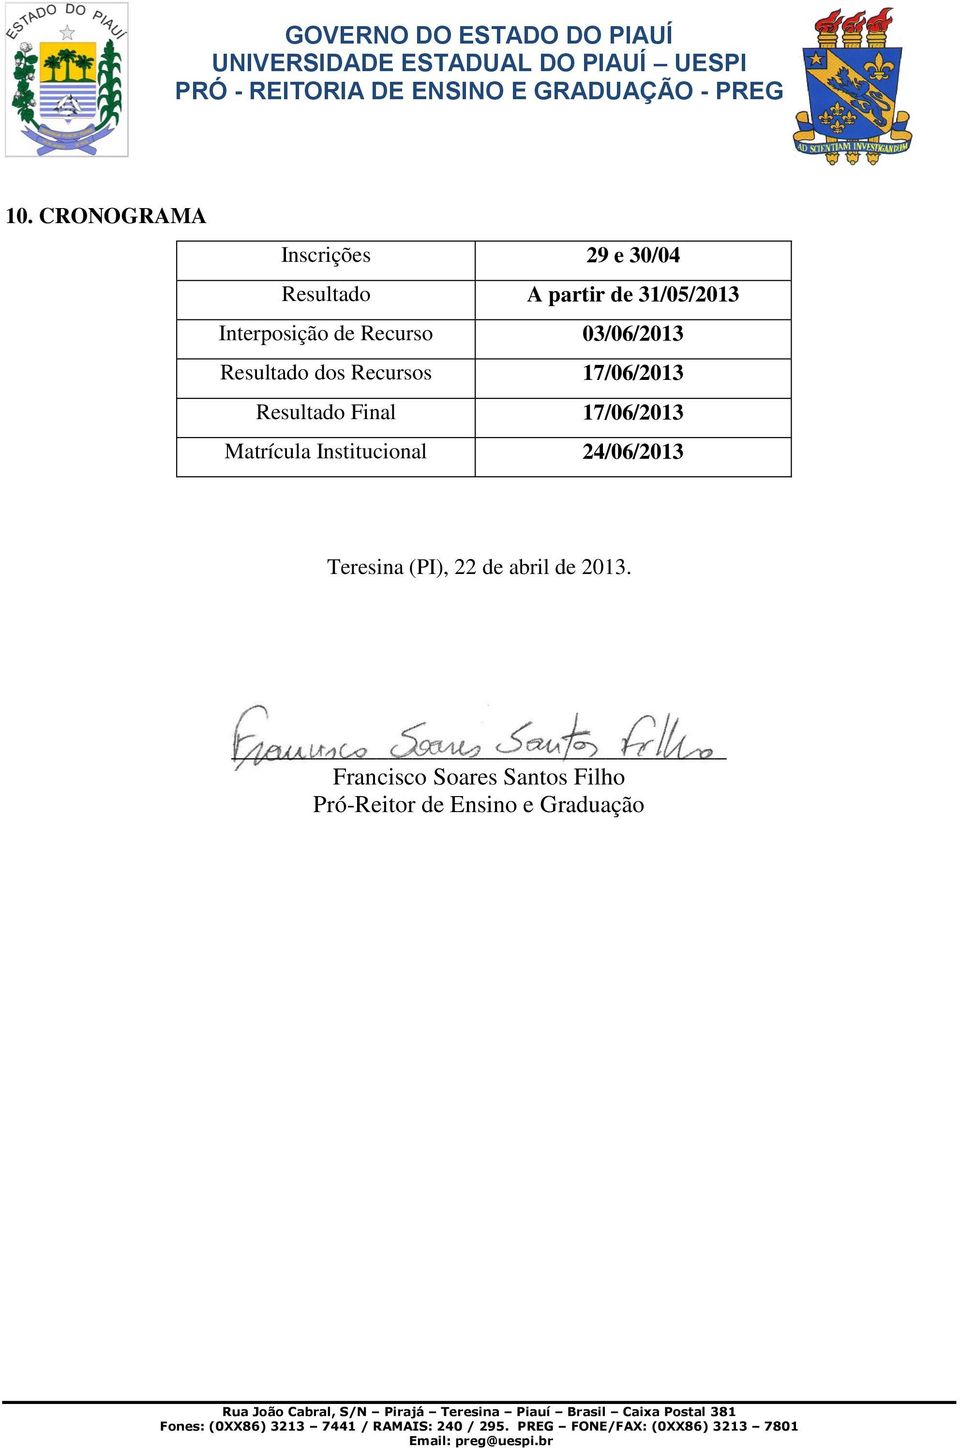 Resultado Final 17/06/2013 Matrícula Institucional 24/06/2013 Teresina